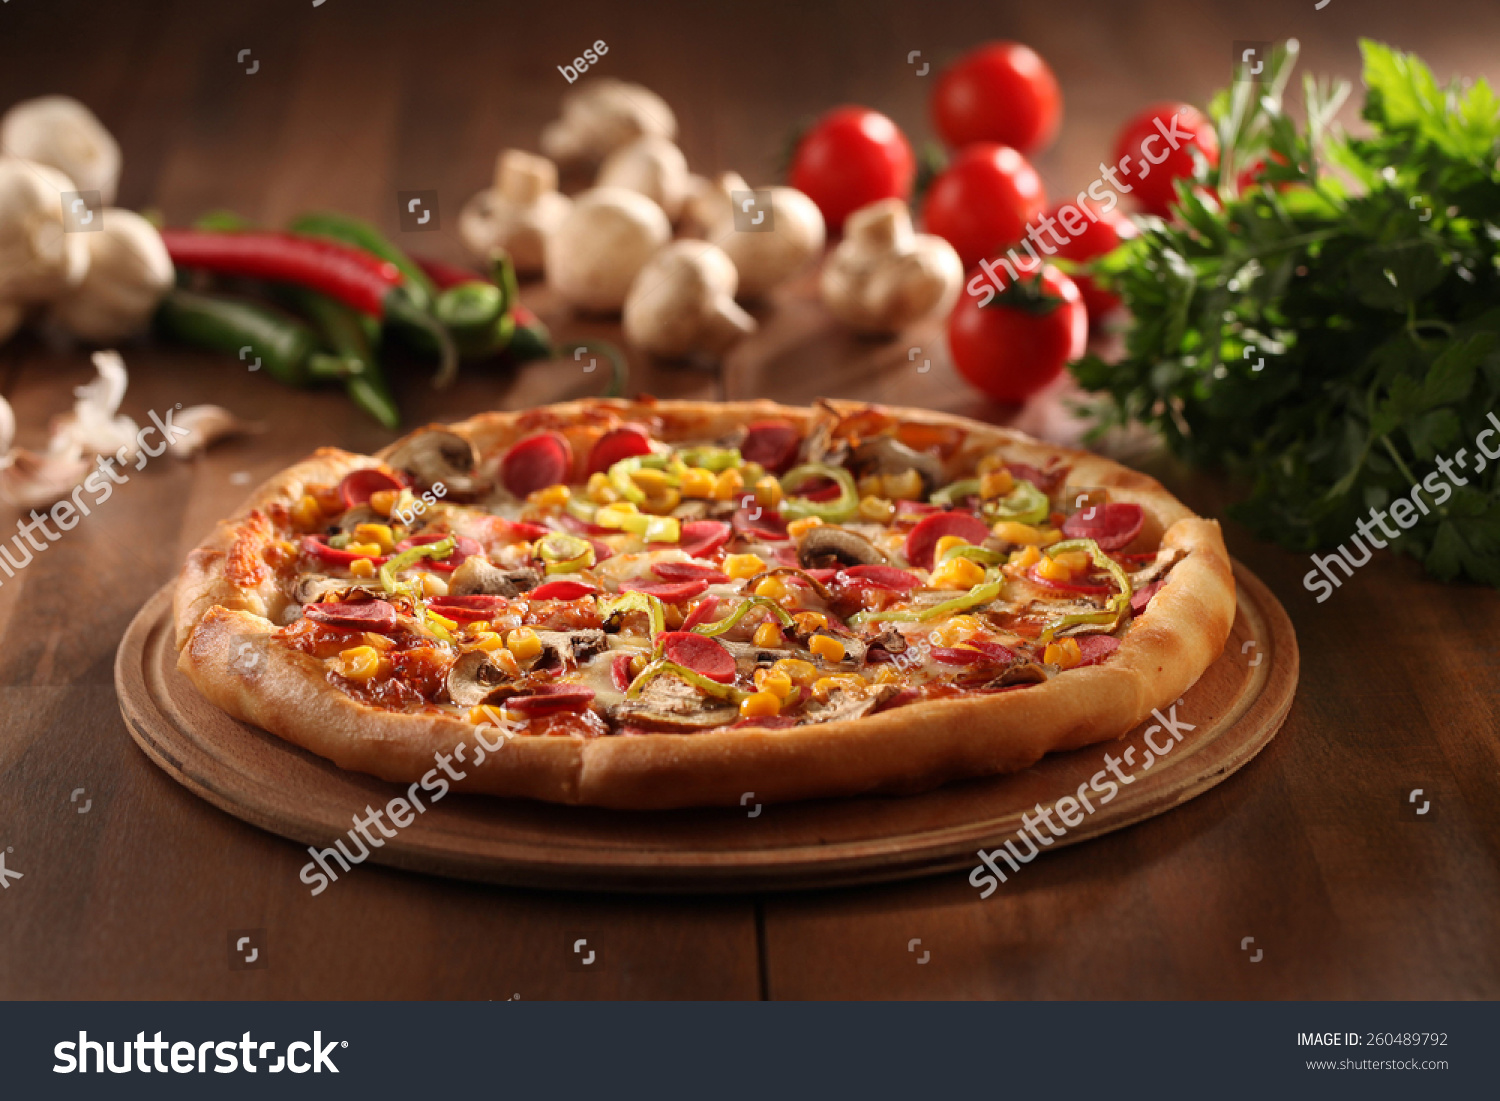 Whole Italian Pizza On Wood Table Stock Photo 260489792 | Shutterstock